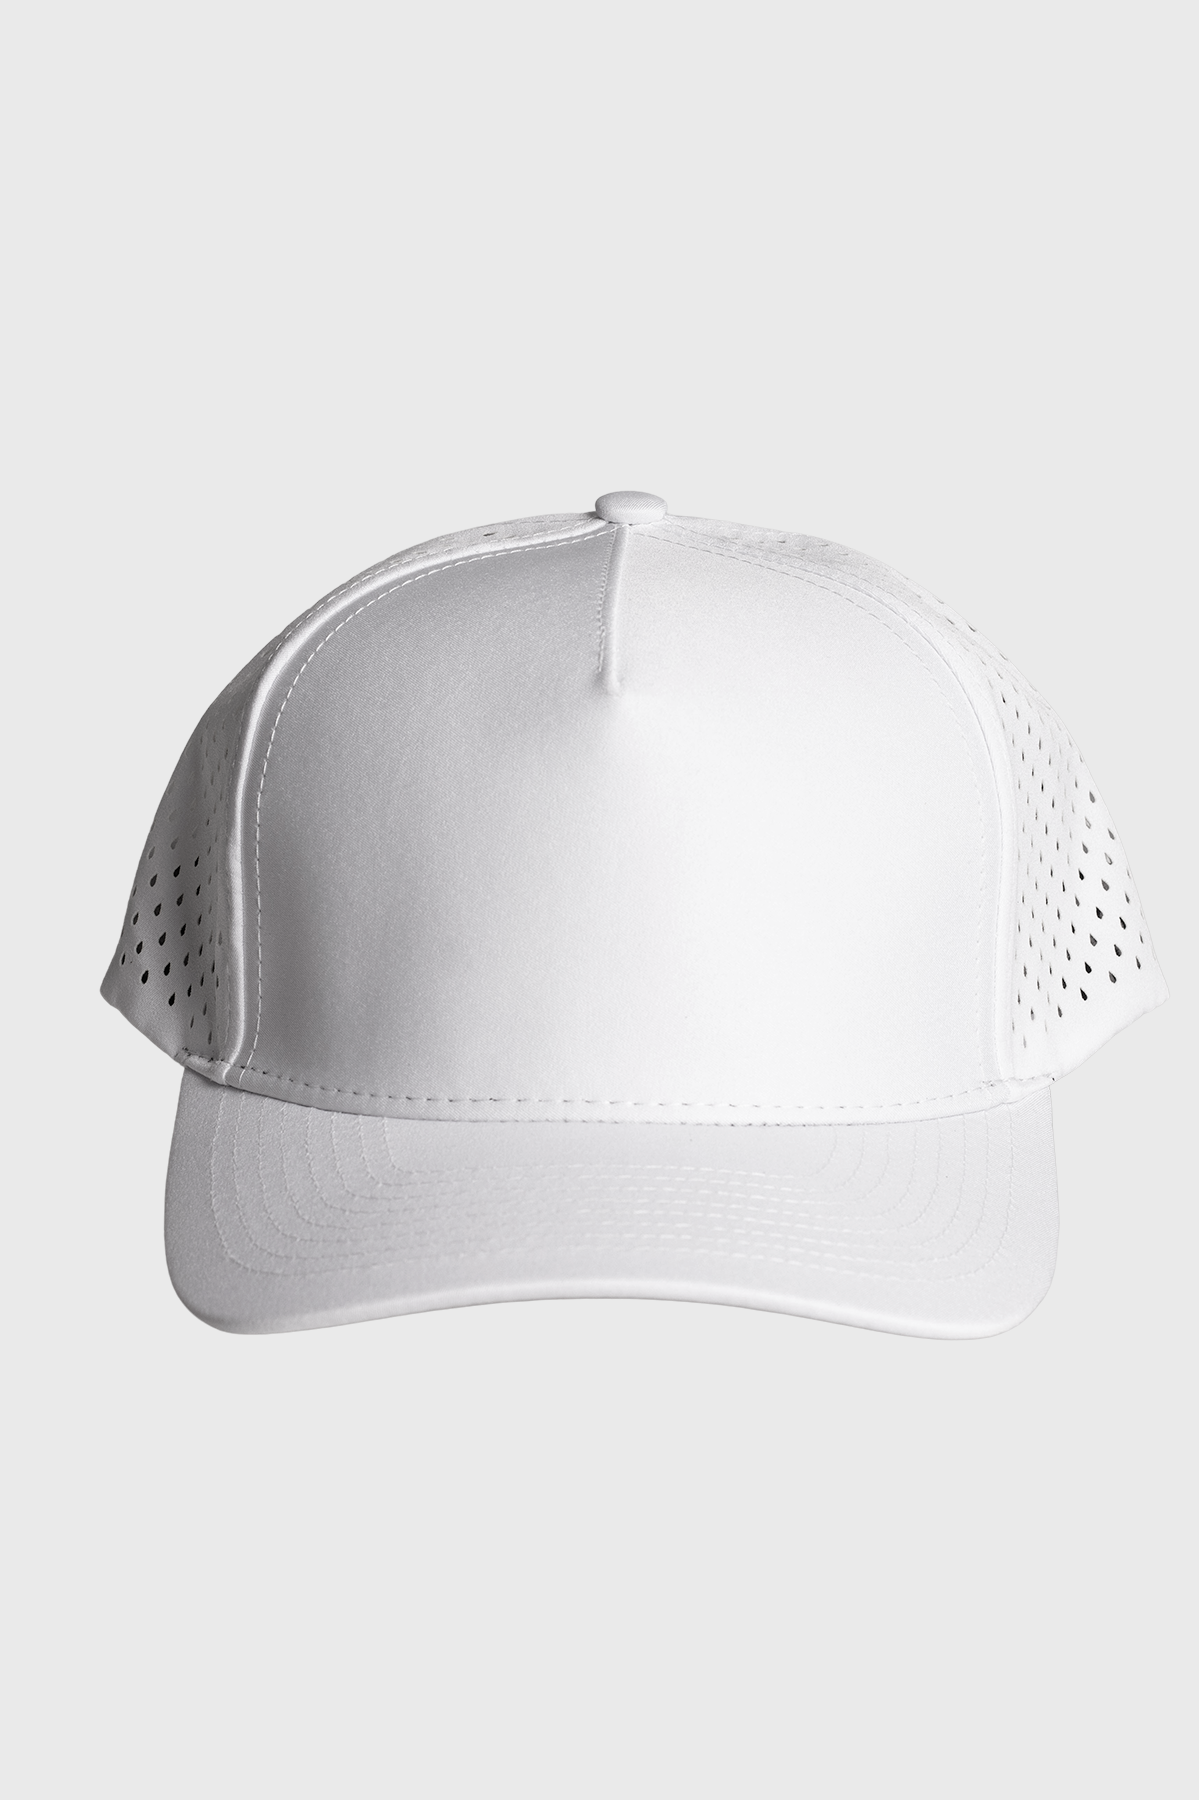 Custom Performance Peak Cap - Plain (White)